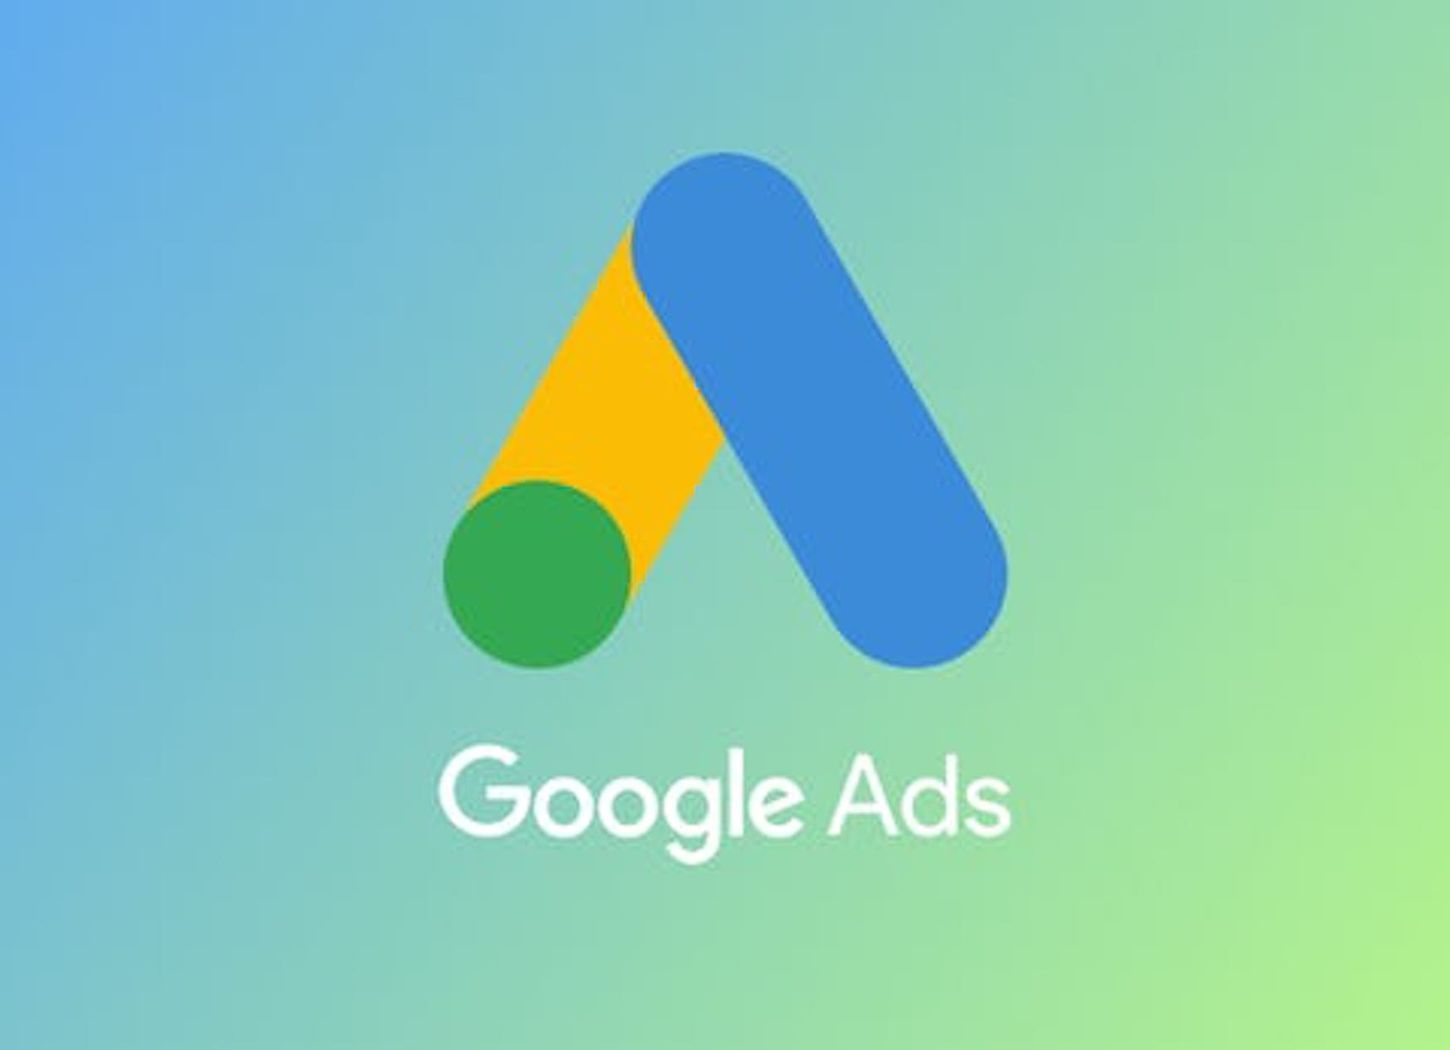 Digital Marketing Institute - Google Ads for Detailing Businesses